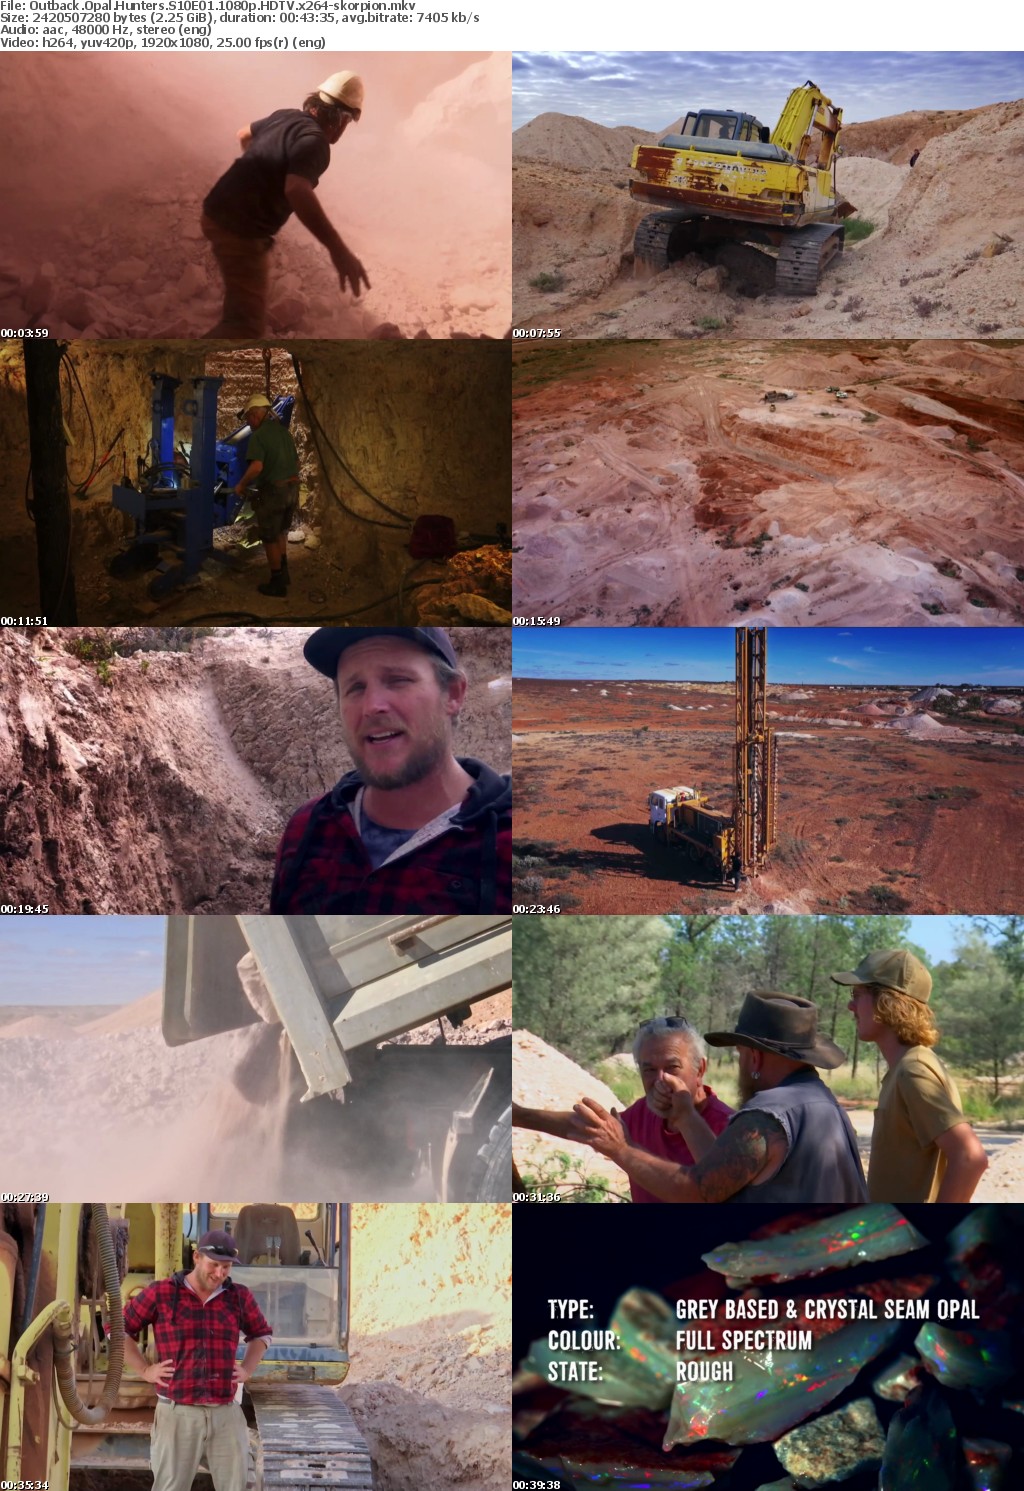 Outback Opal Hunters S10E01 1080p HDTV x264-skorpion mkv